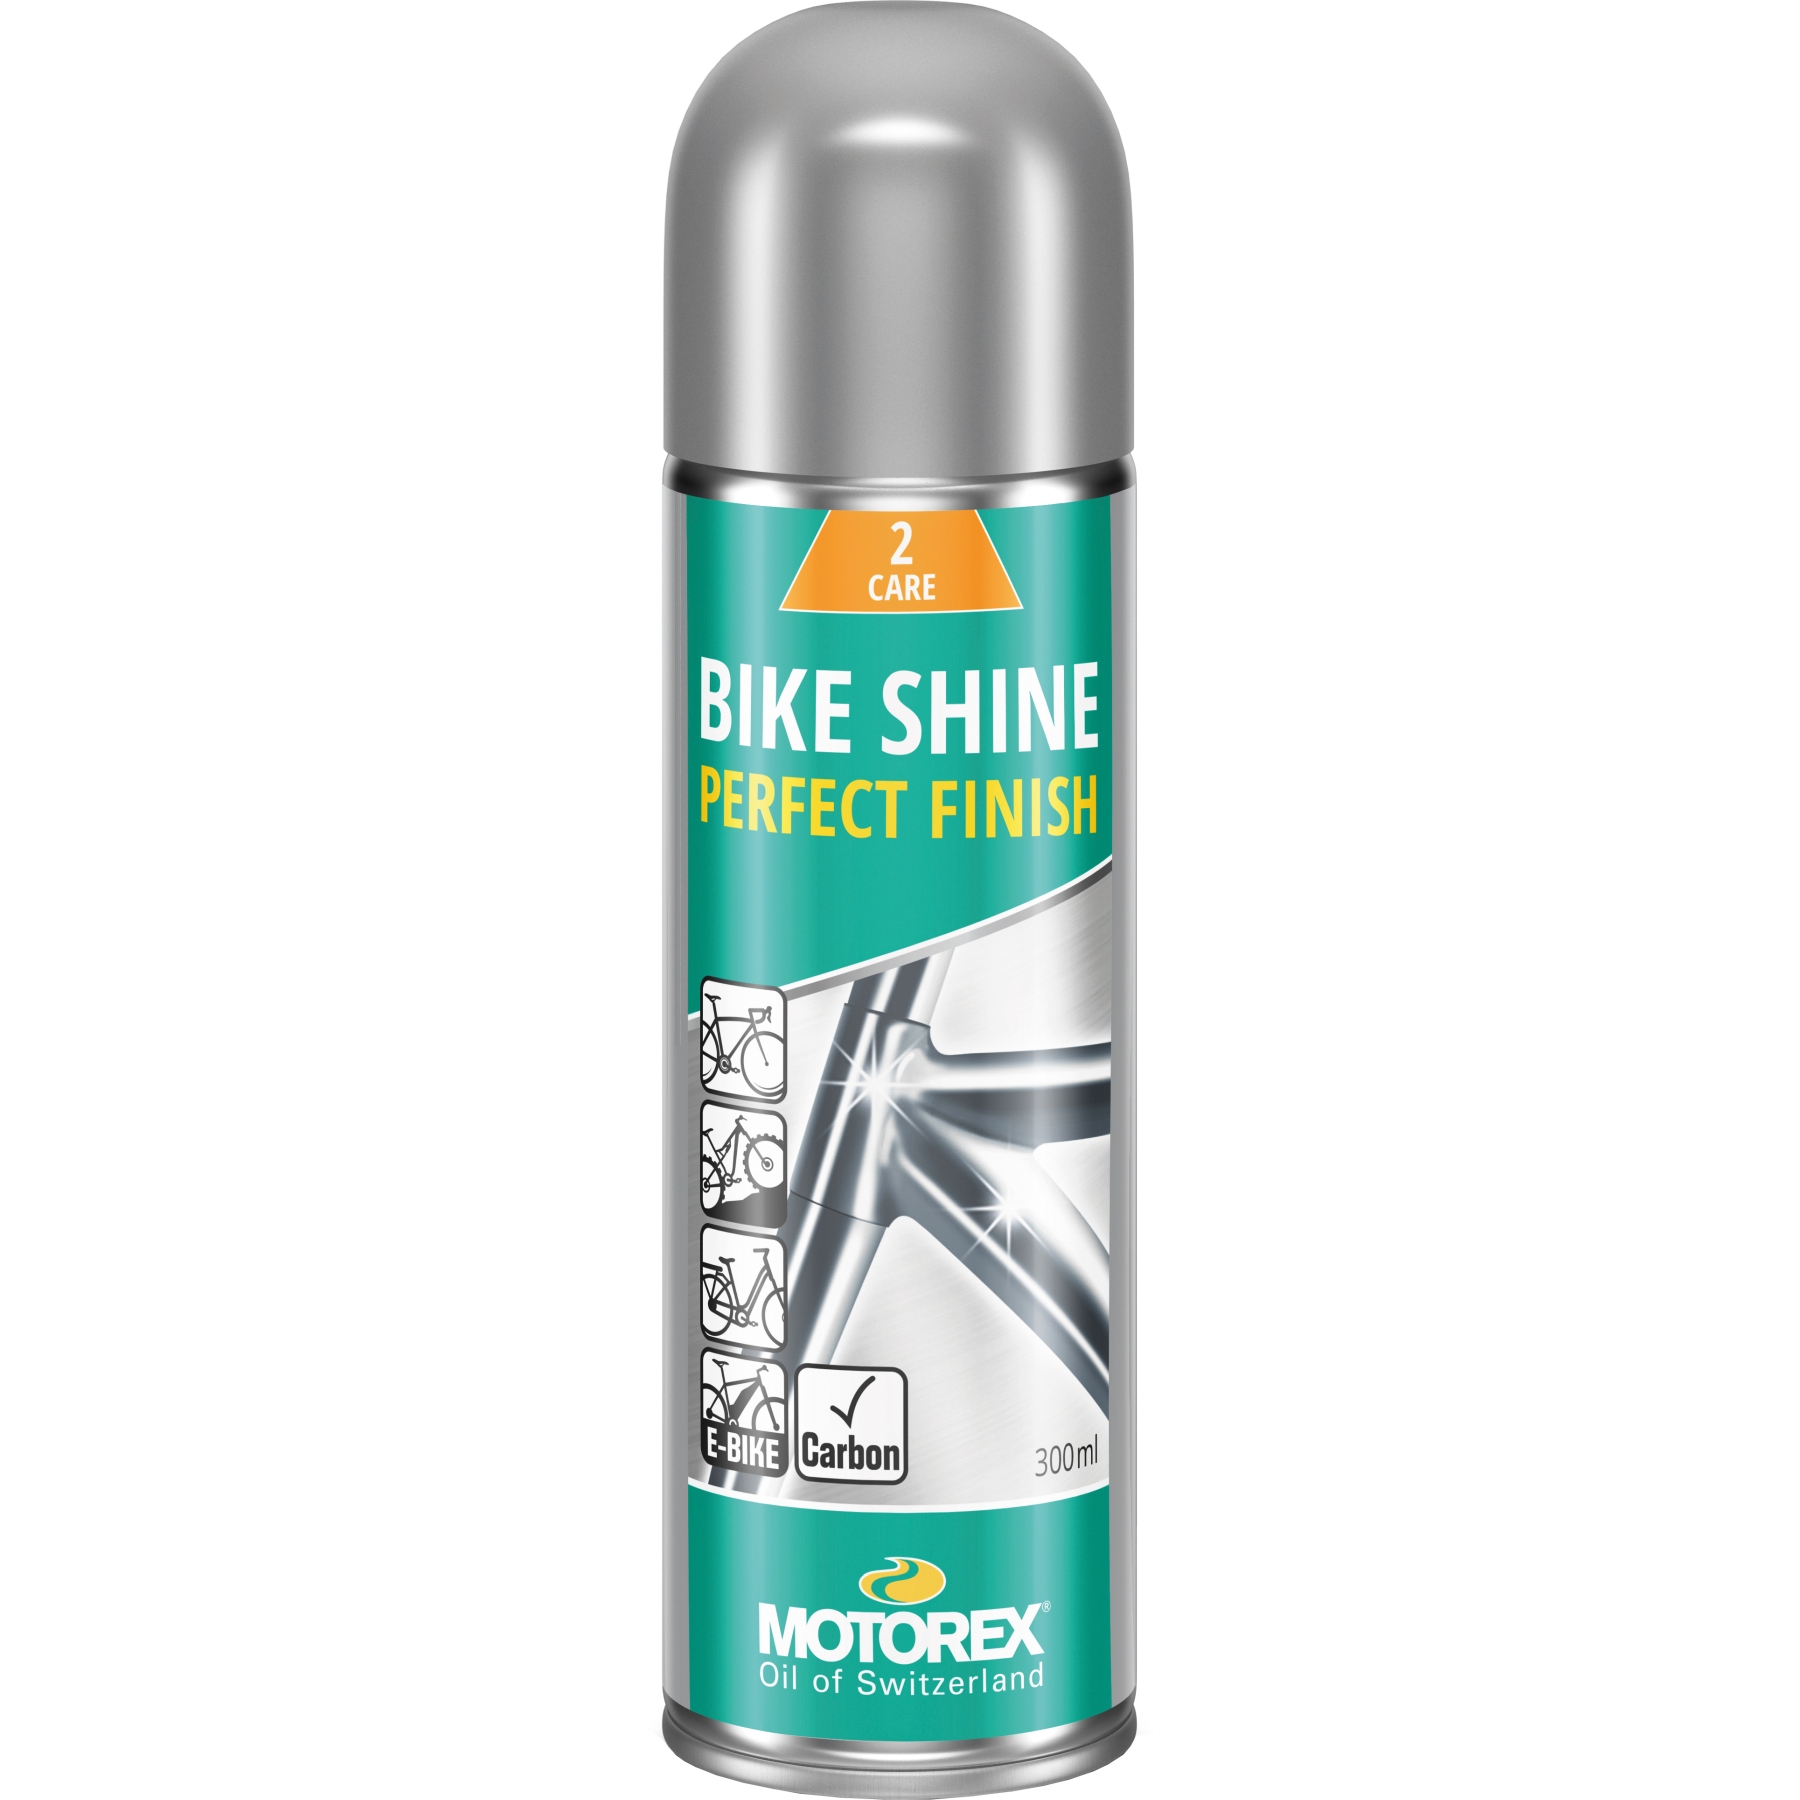 Productfoto van Motorex Bike Shine - Care and Protection - Spray - 300ml